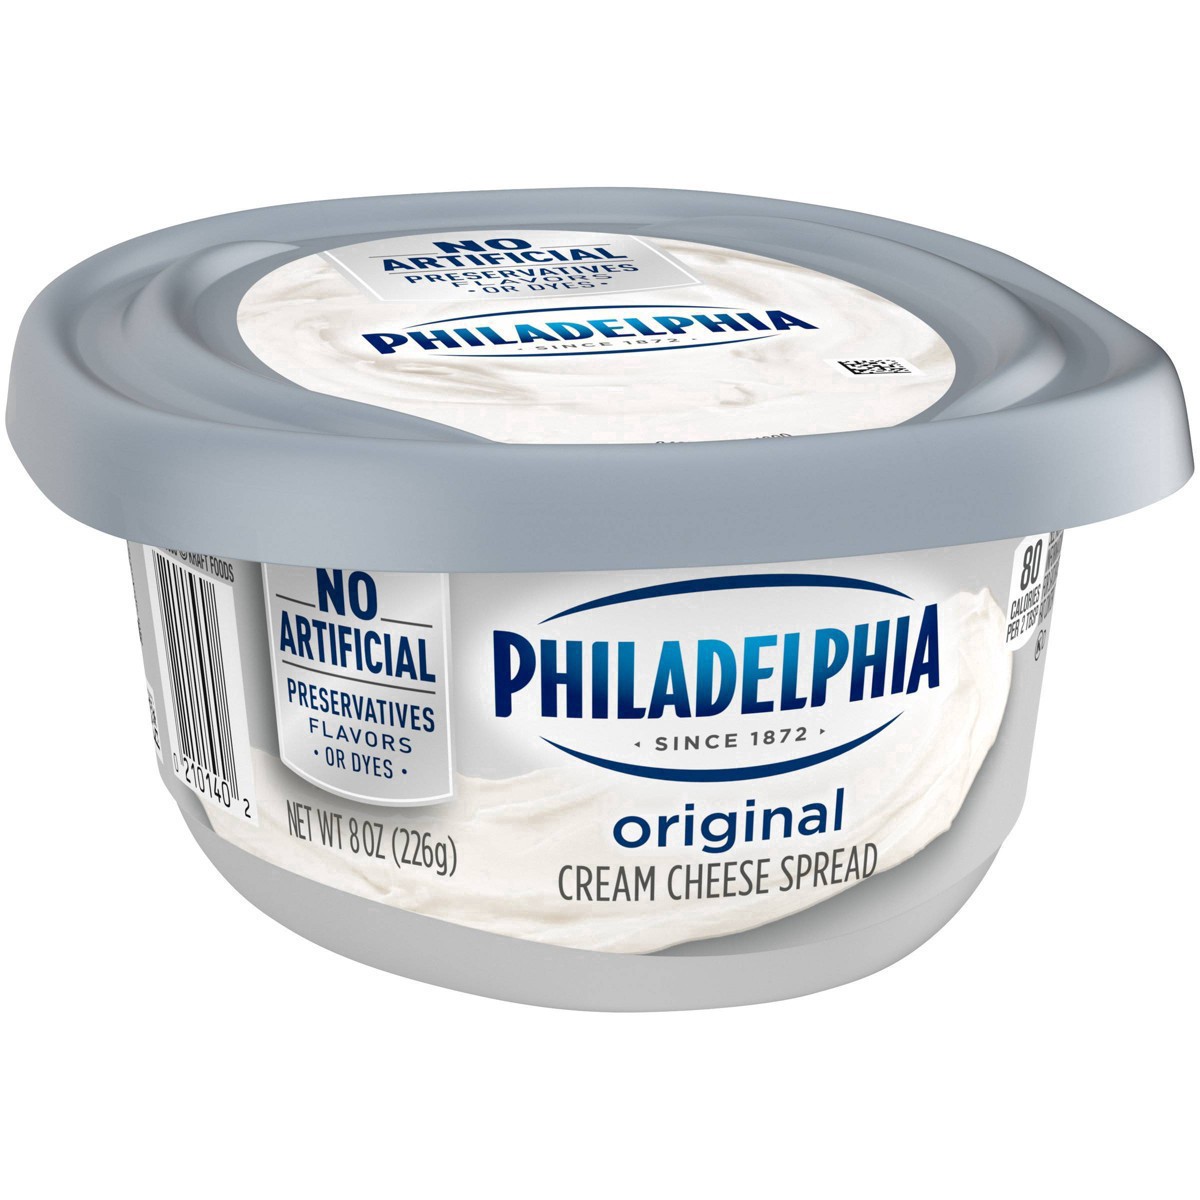 slide 42 of 67, Philadelphia Original Cream Cheese Spread, 8 oz